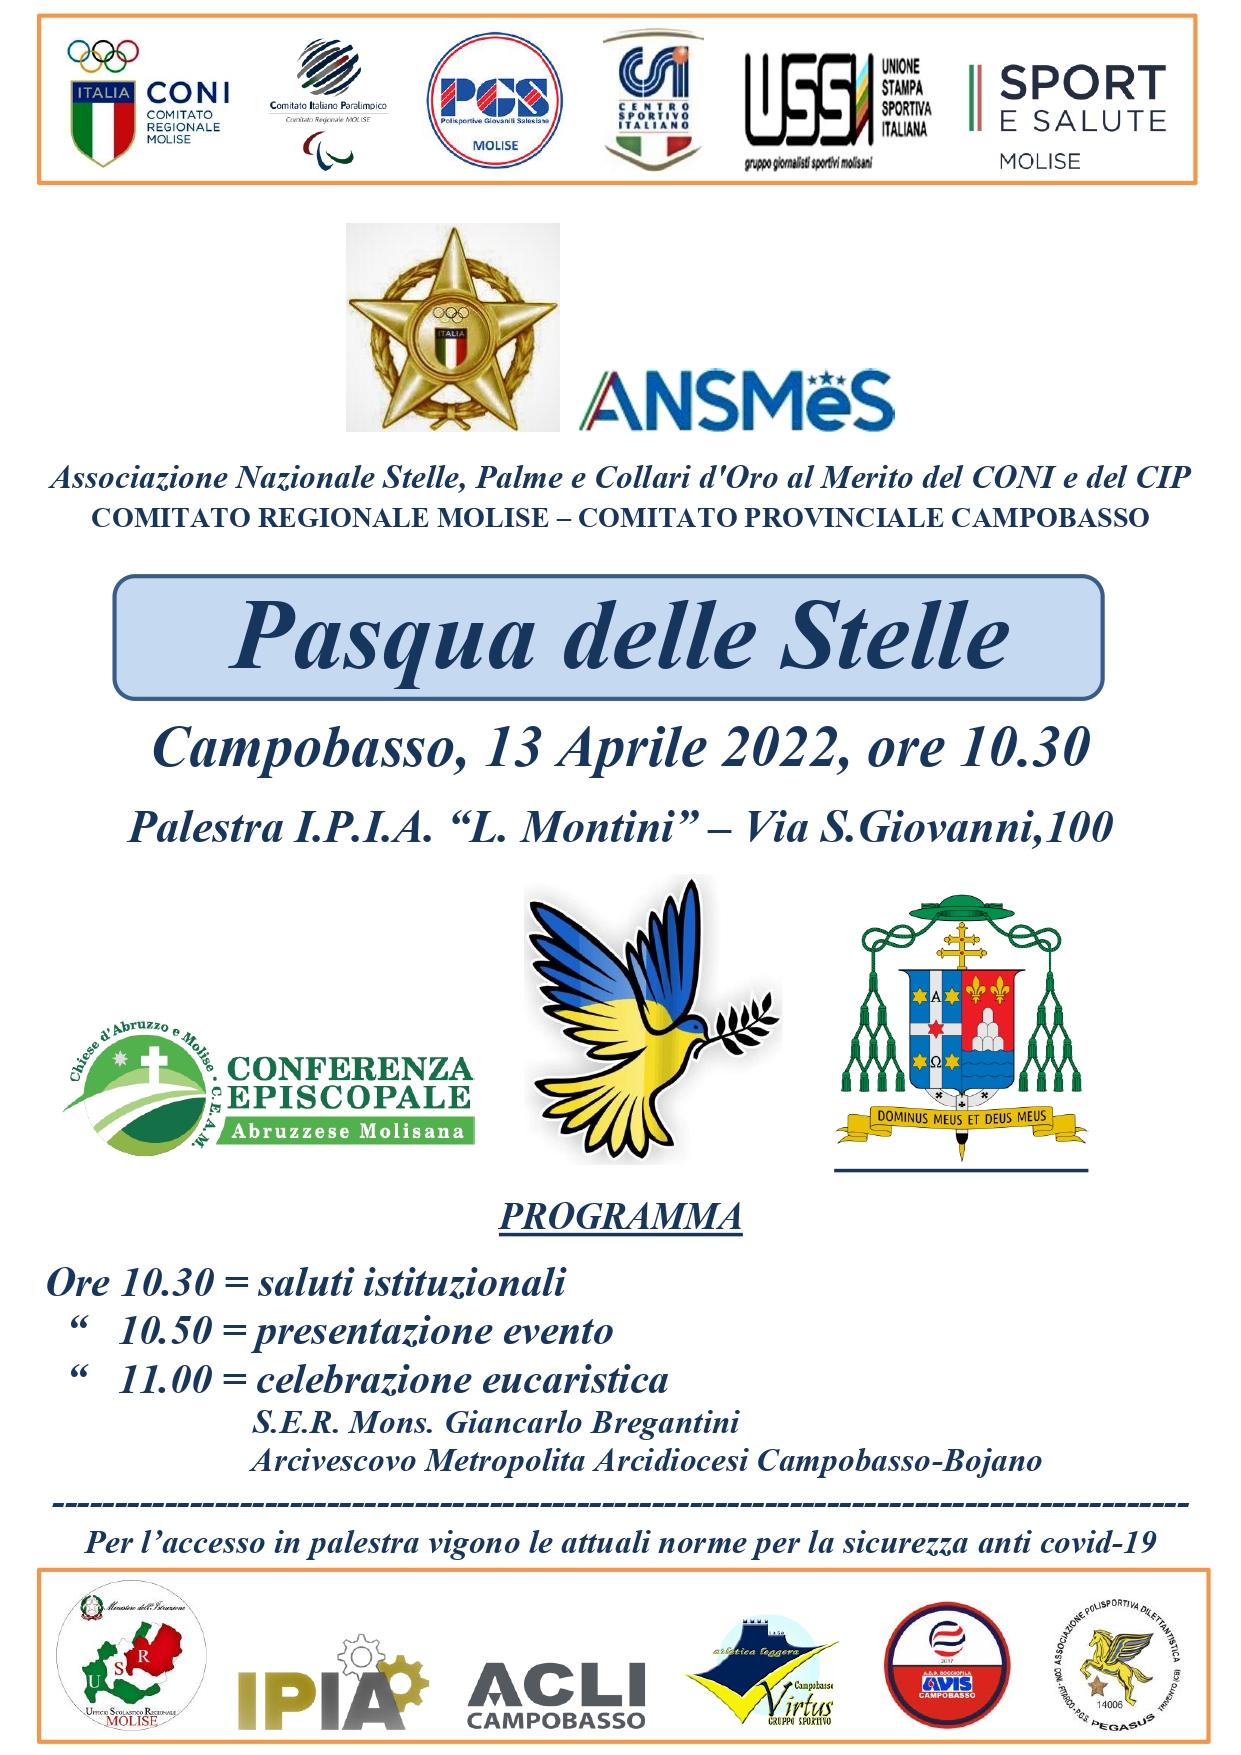 images/news/regionali/molise/locandina_Pasqua_delle_Stelle_2022_page-0001.jpg